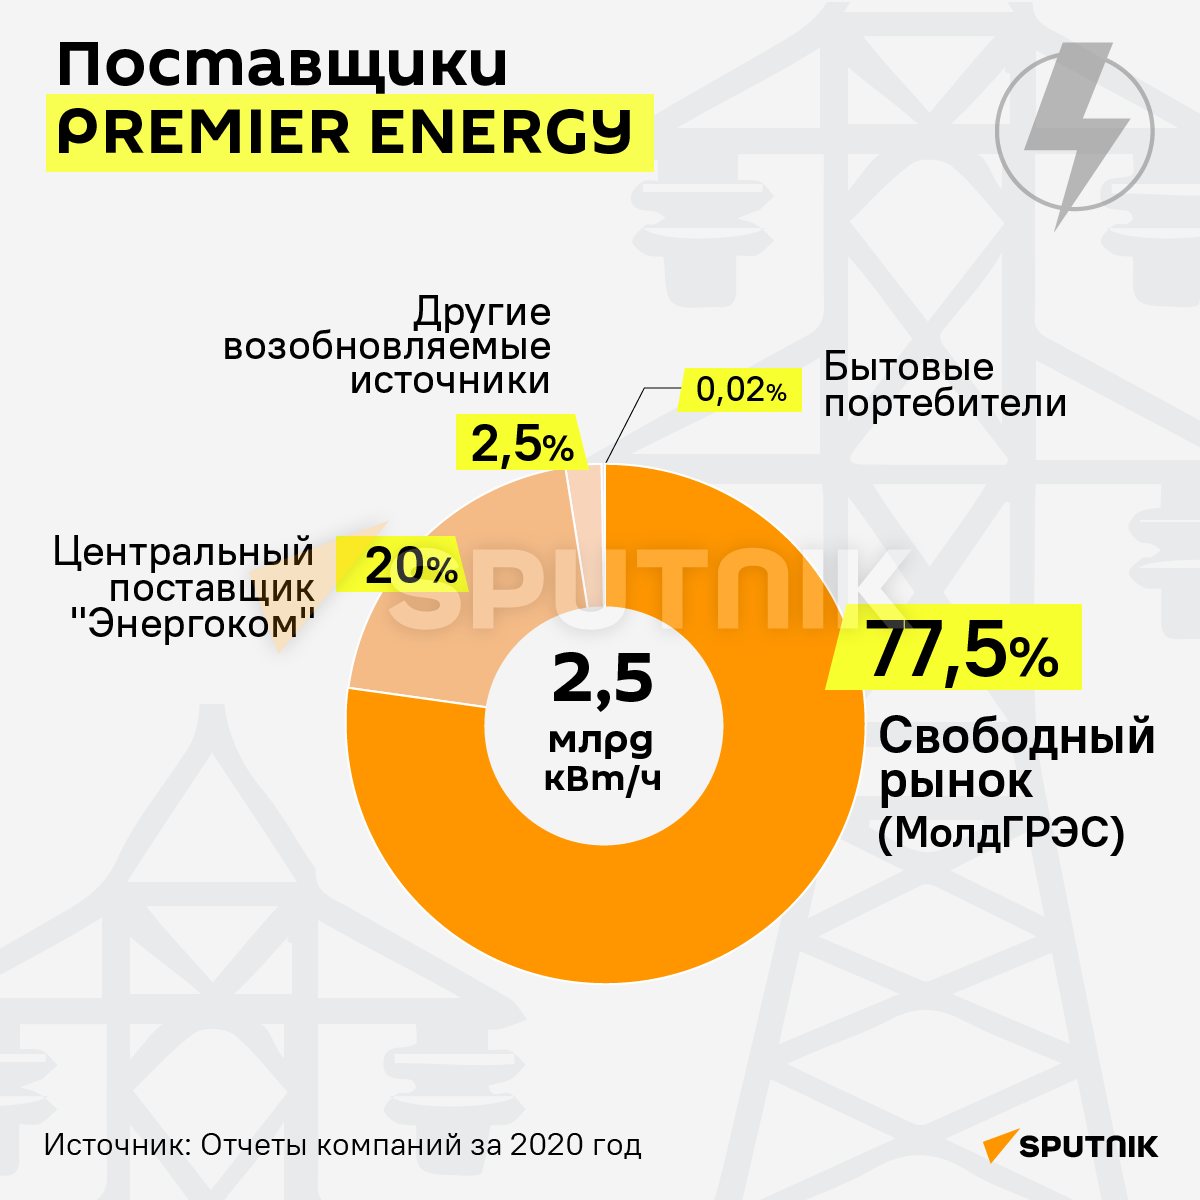 Premier Energy - Sputnik Молдова